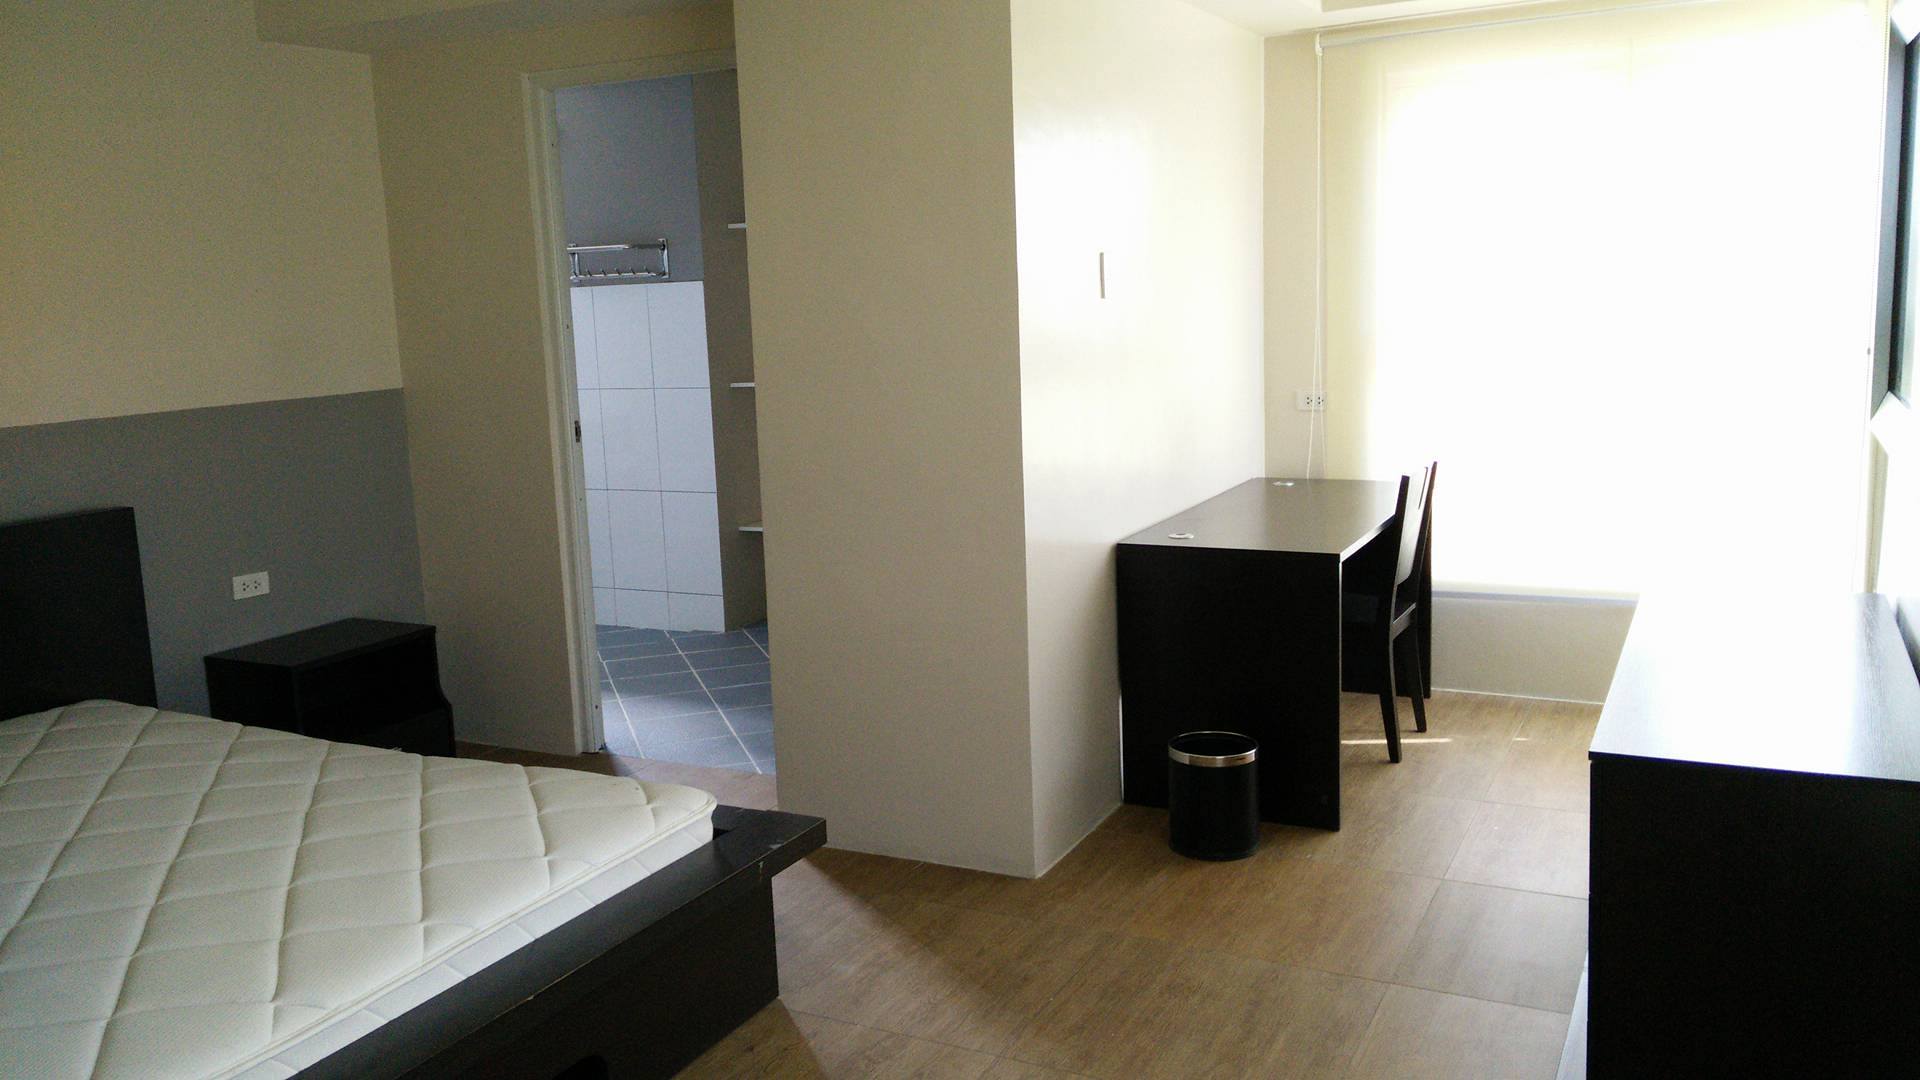 2-bedroom-furnished-apartment-near-ayala-mall-cebu-city